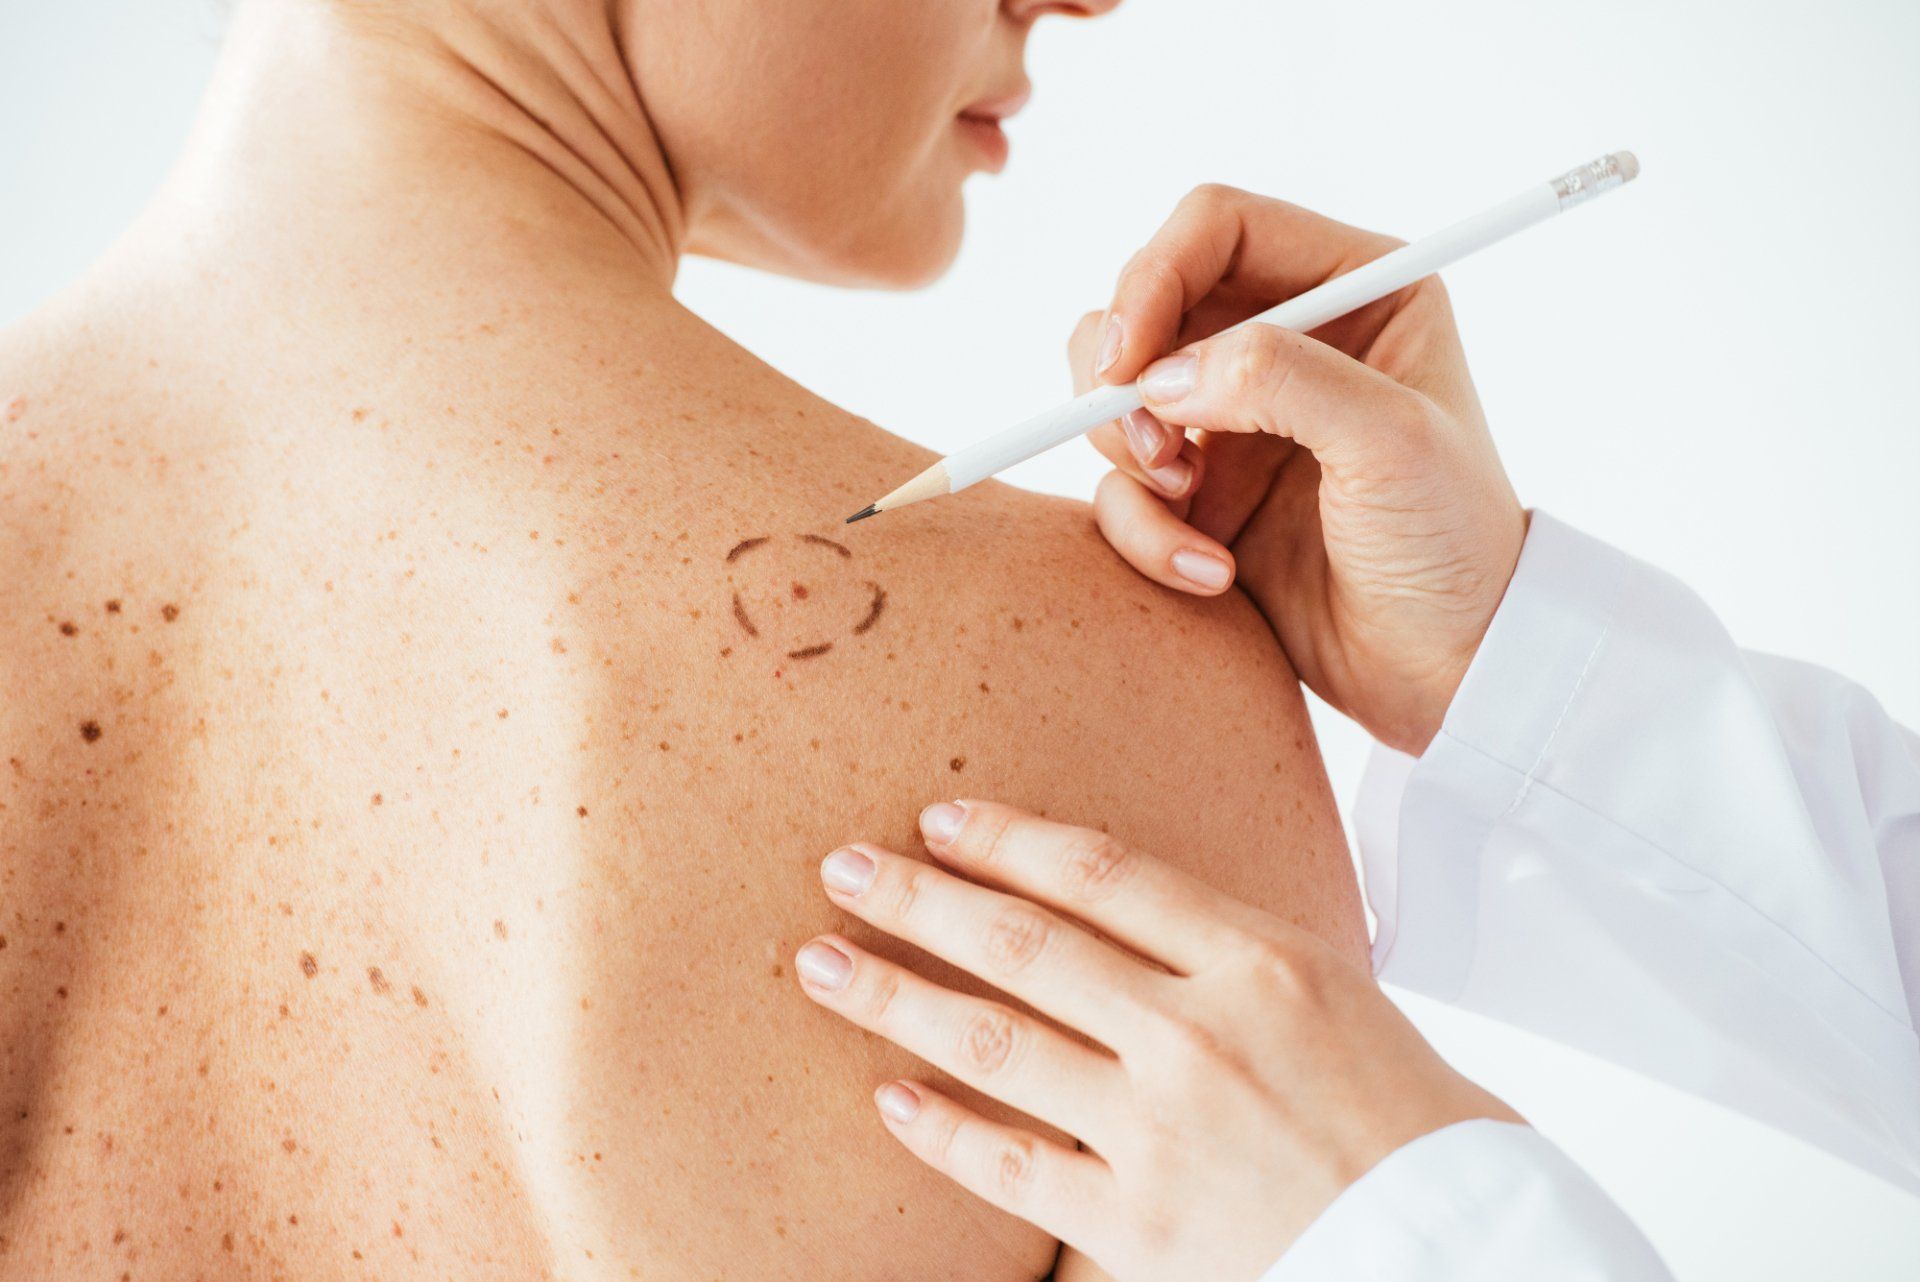 dermatologic surgeon marks mole for removal on female patient's shoulder